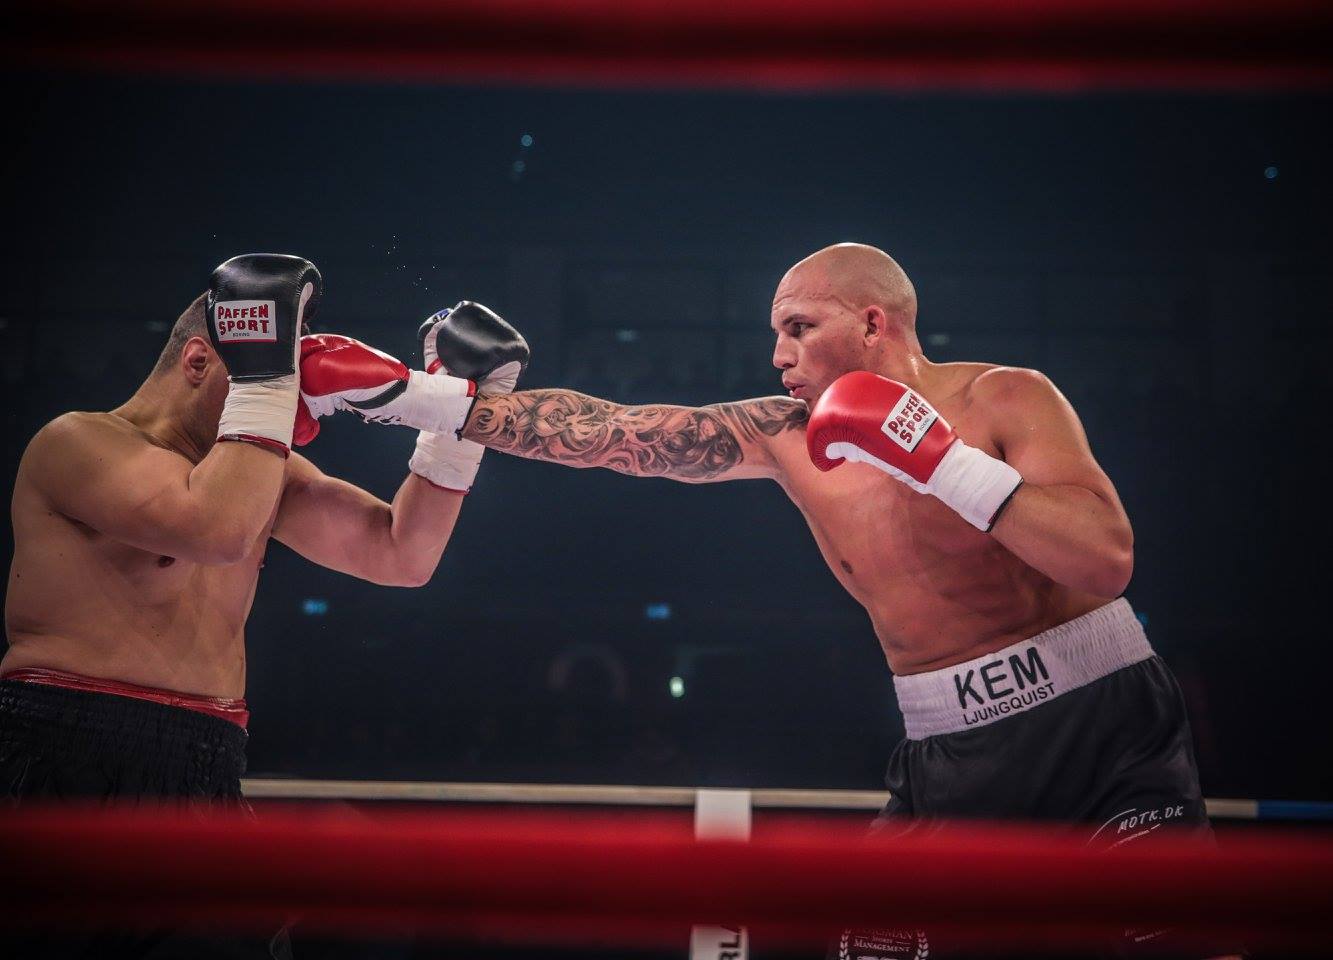 Heavyweight Kem Ljungquist wants to rebuild boxing’s popularity in Denmark